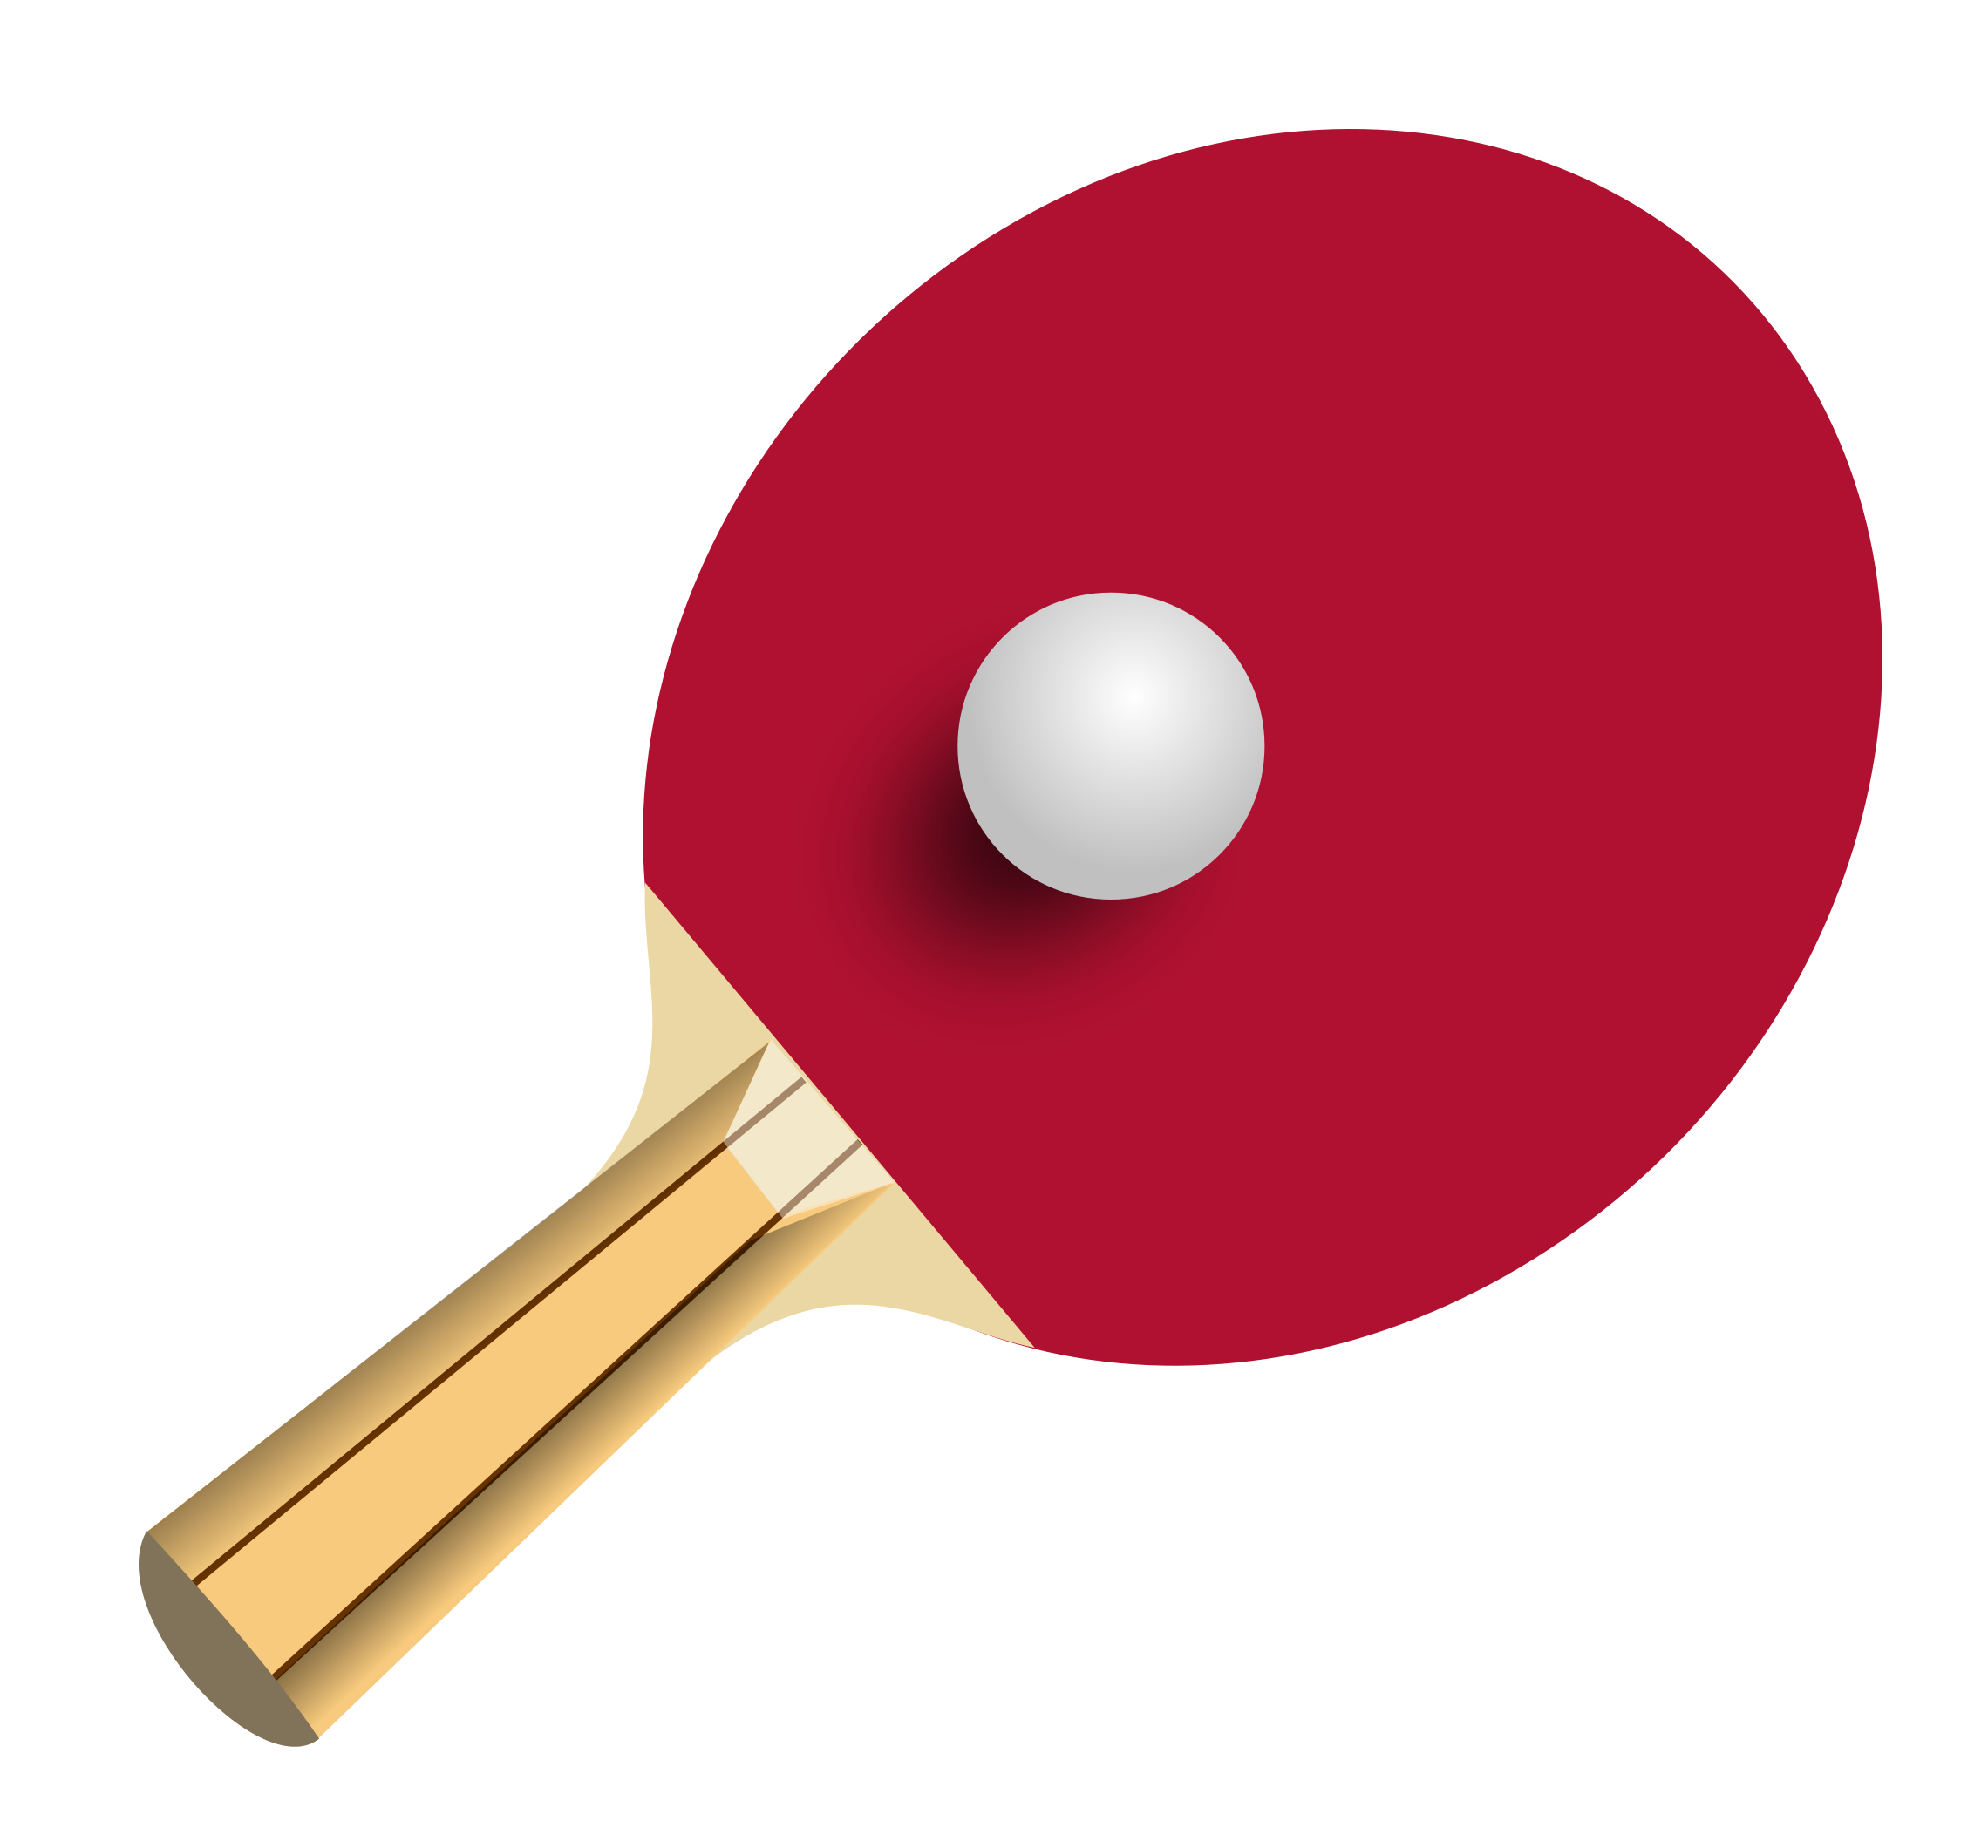 Red Ping Pong Racket PNG Transparent pngteam.com